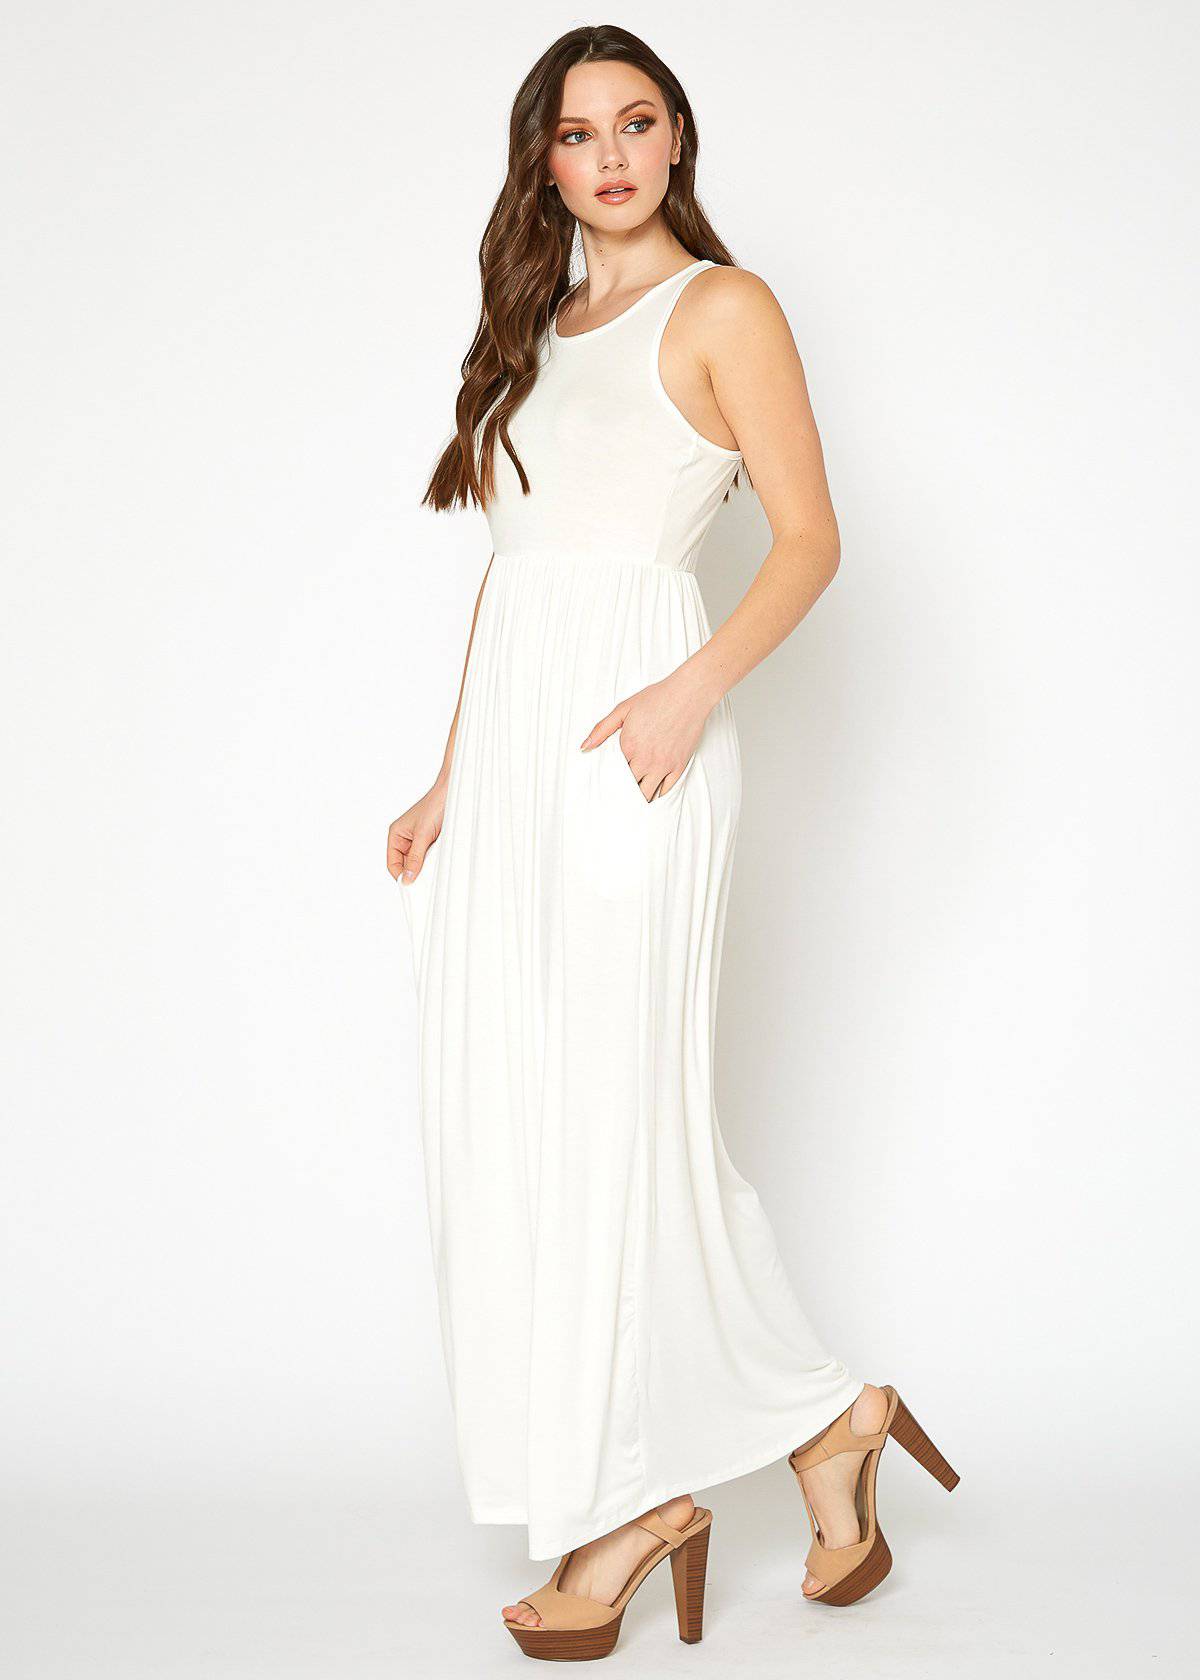 Womens Sleeveless Pleated Maxi Dress by Shop at Konus